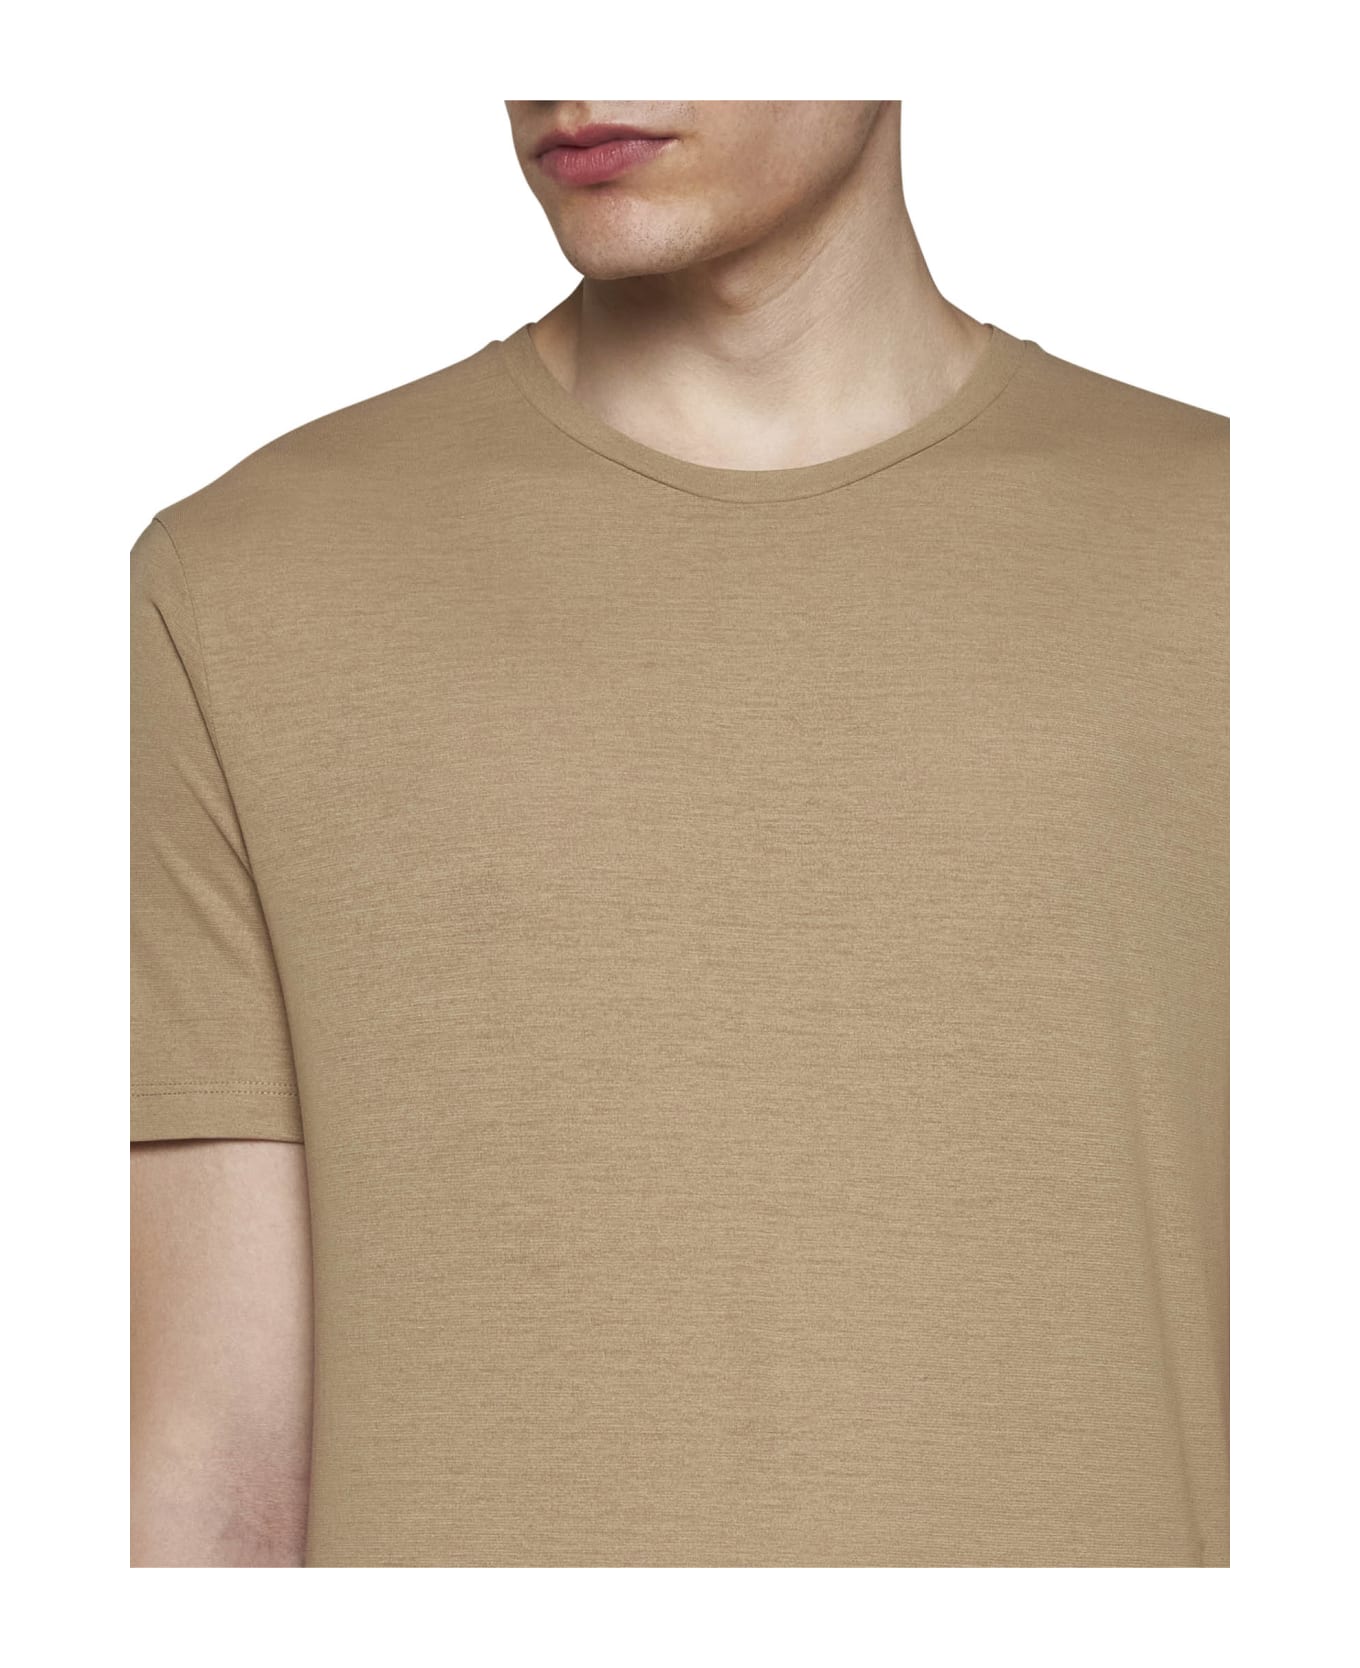 Herno T-Shirt - Sand